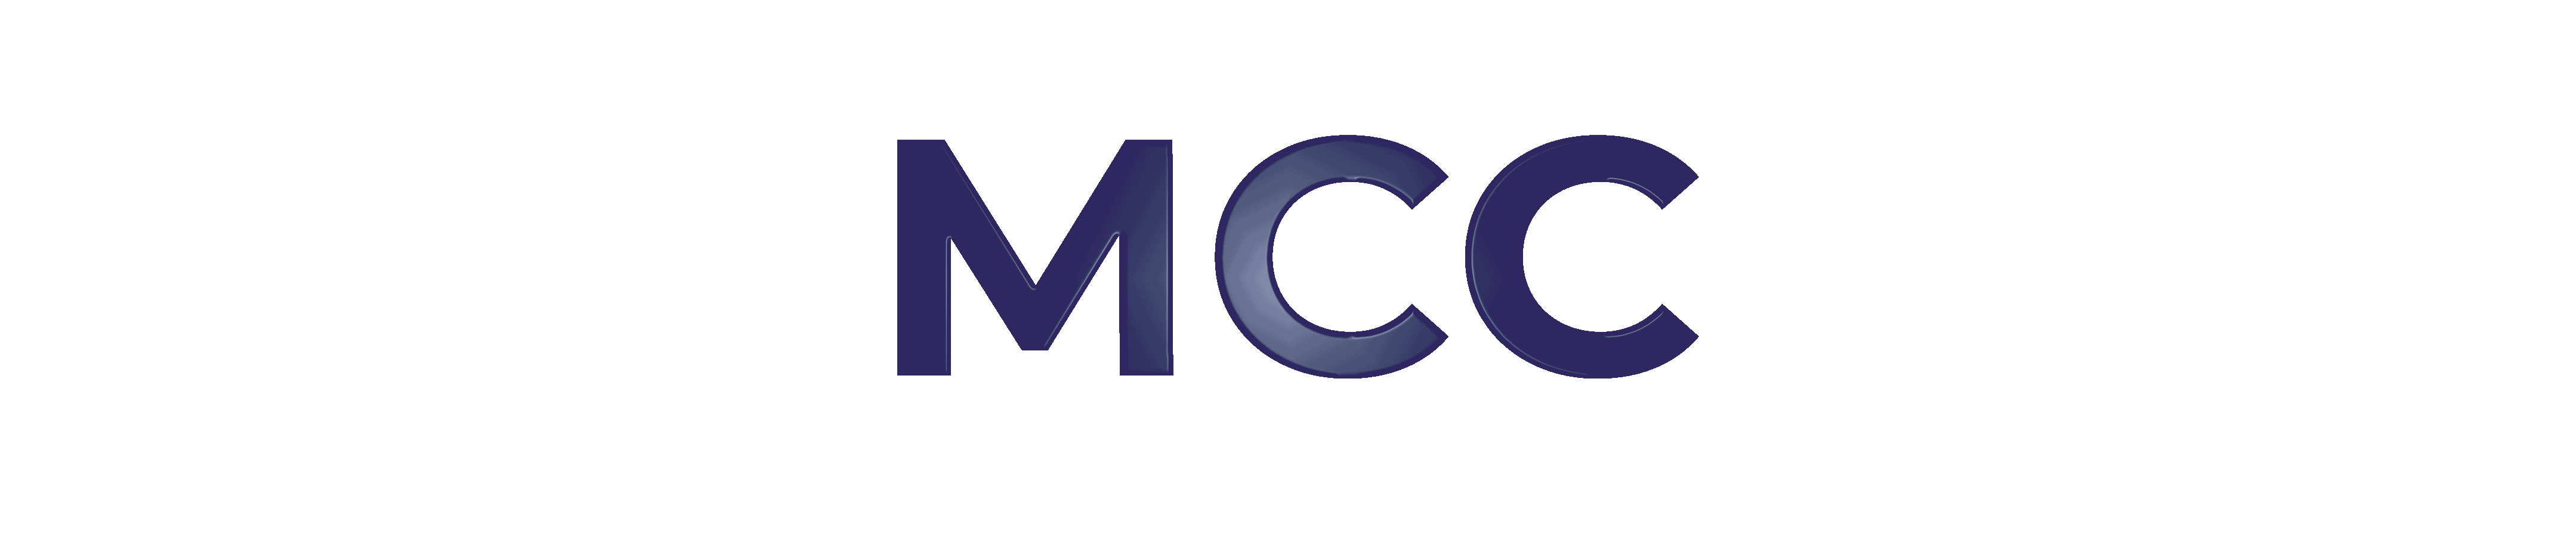 MCC Client